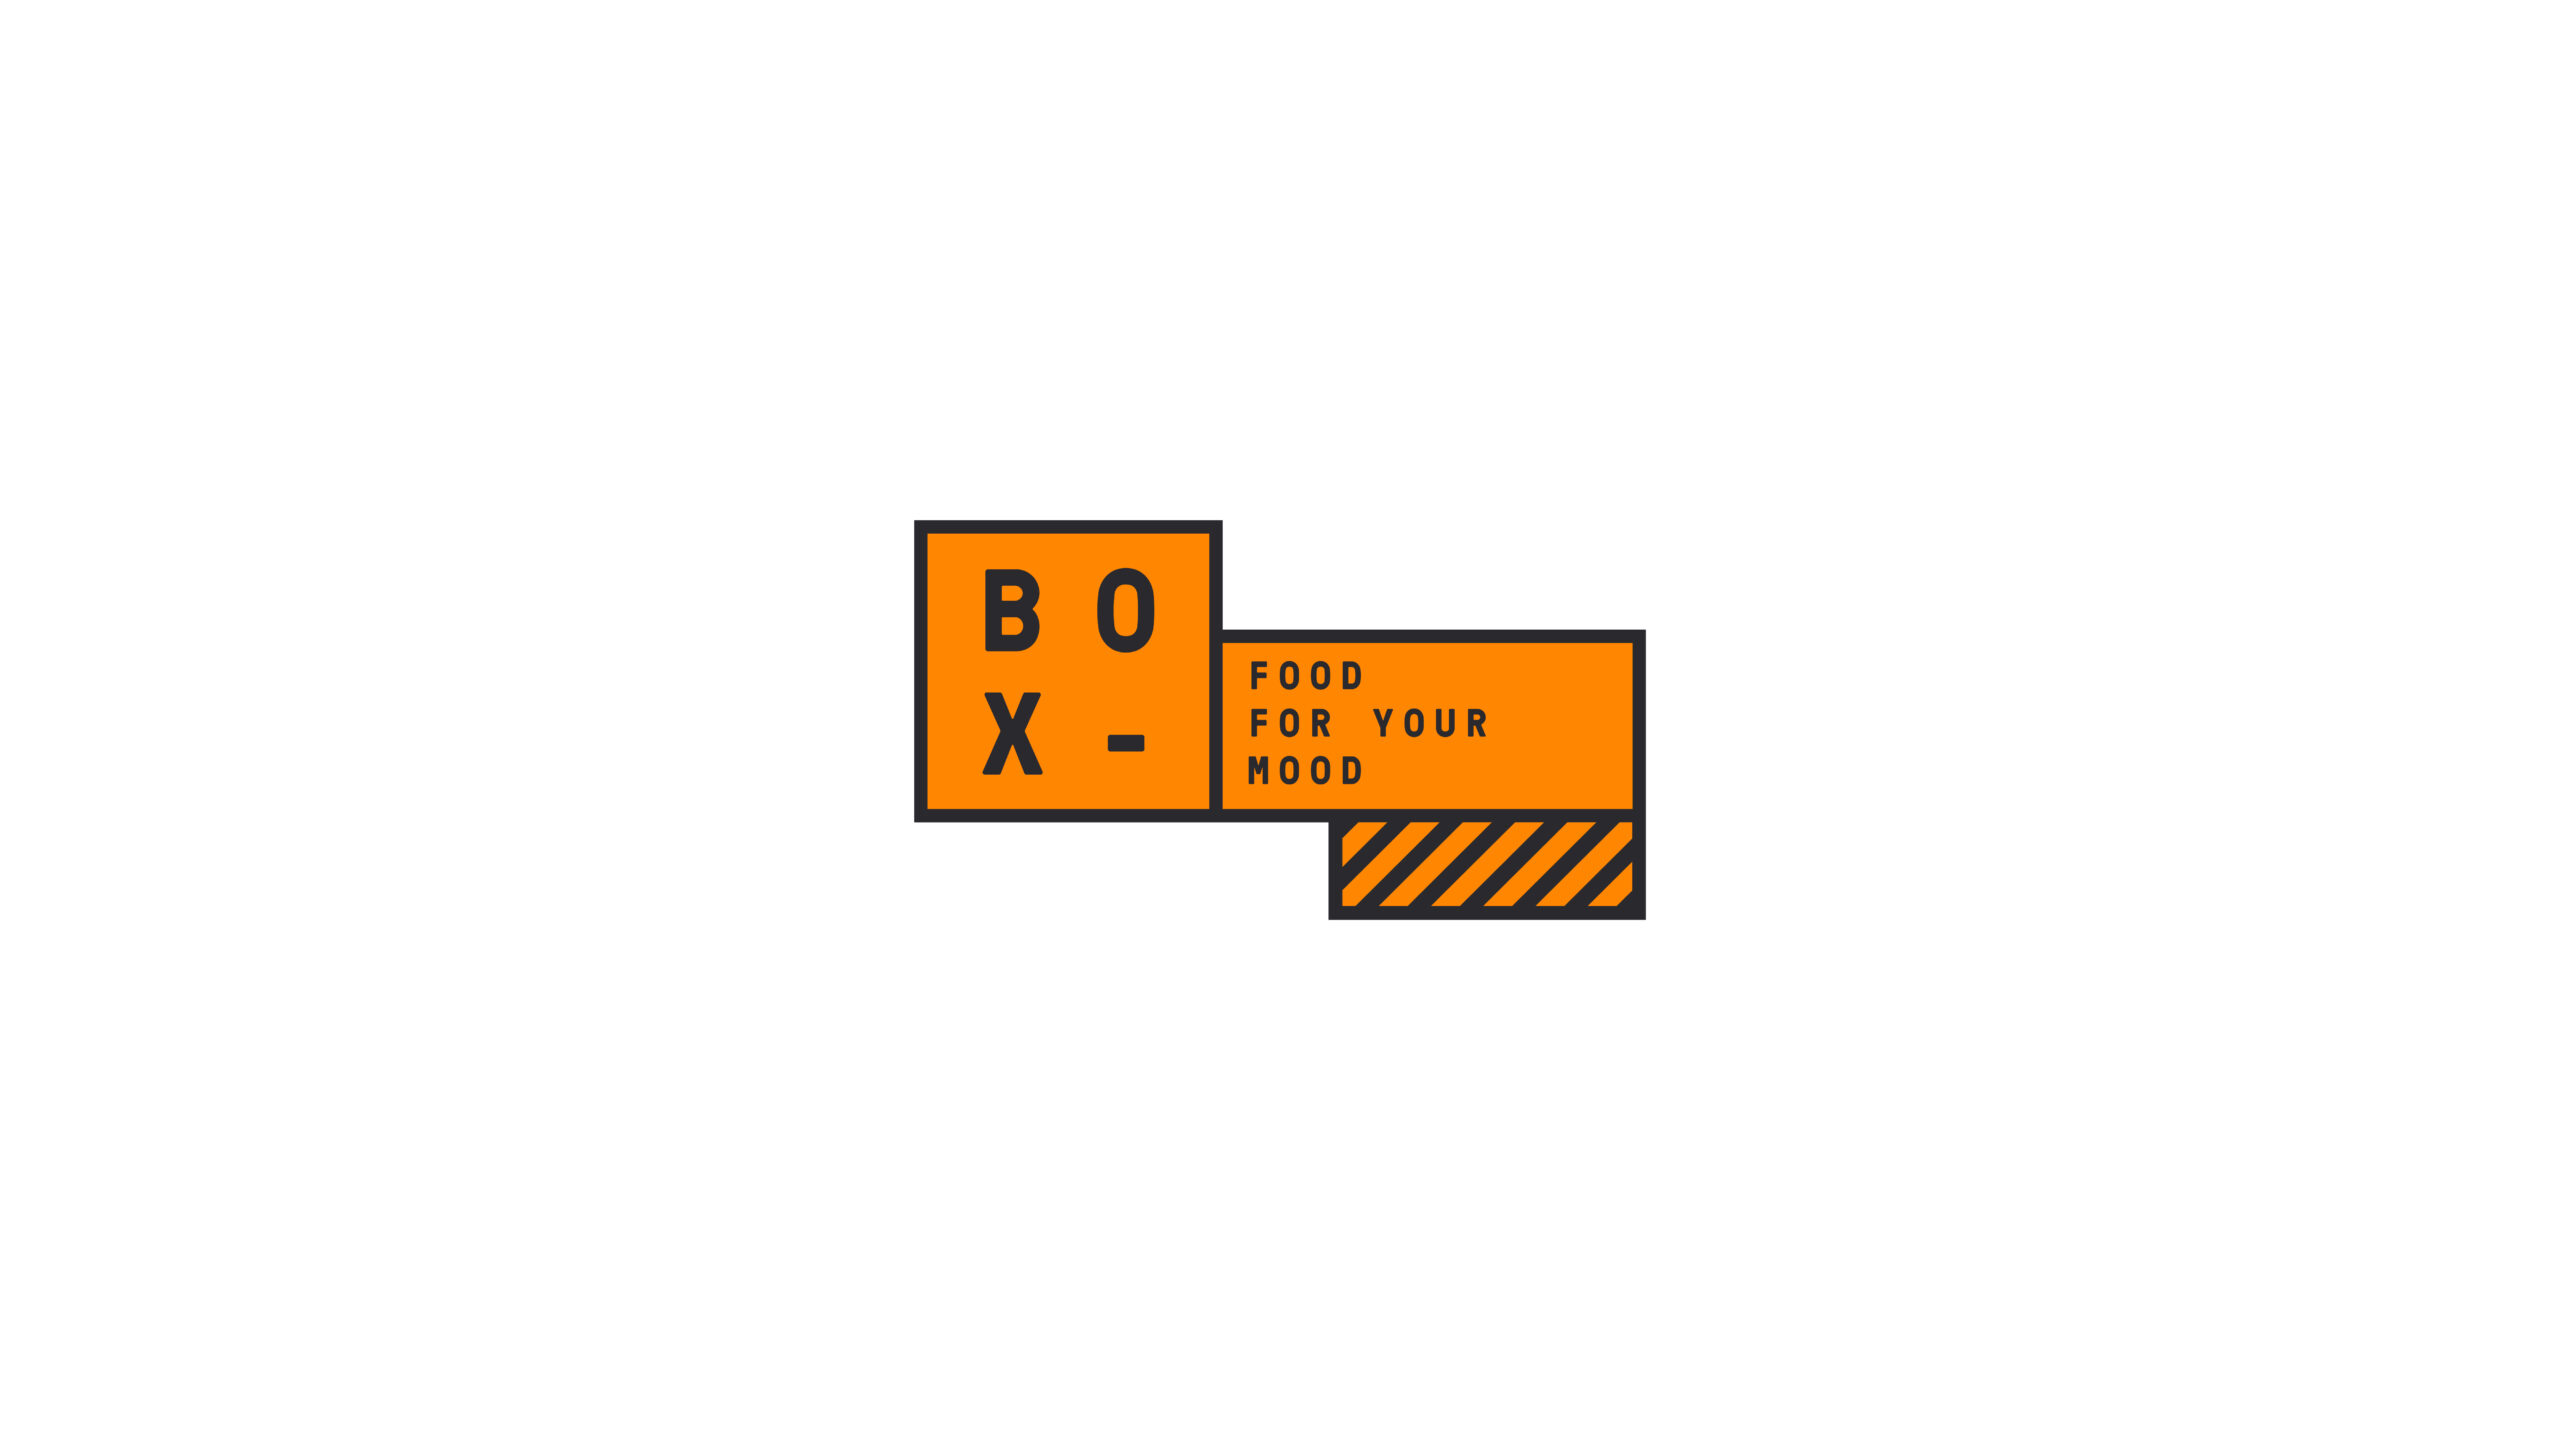 BOX Logo